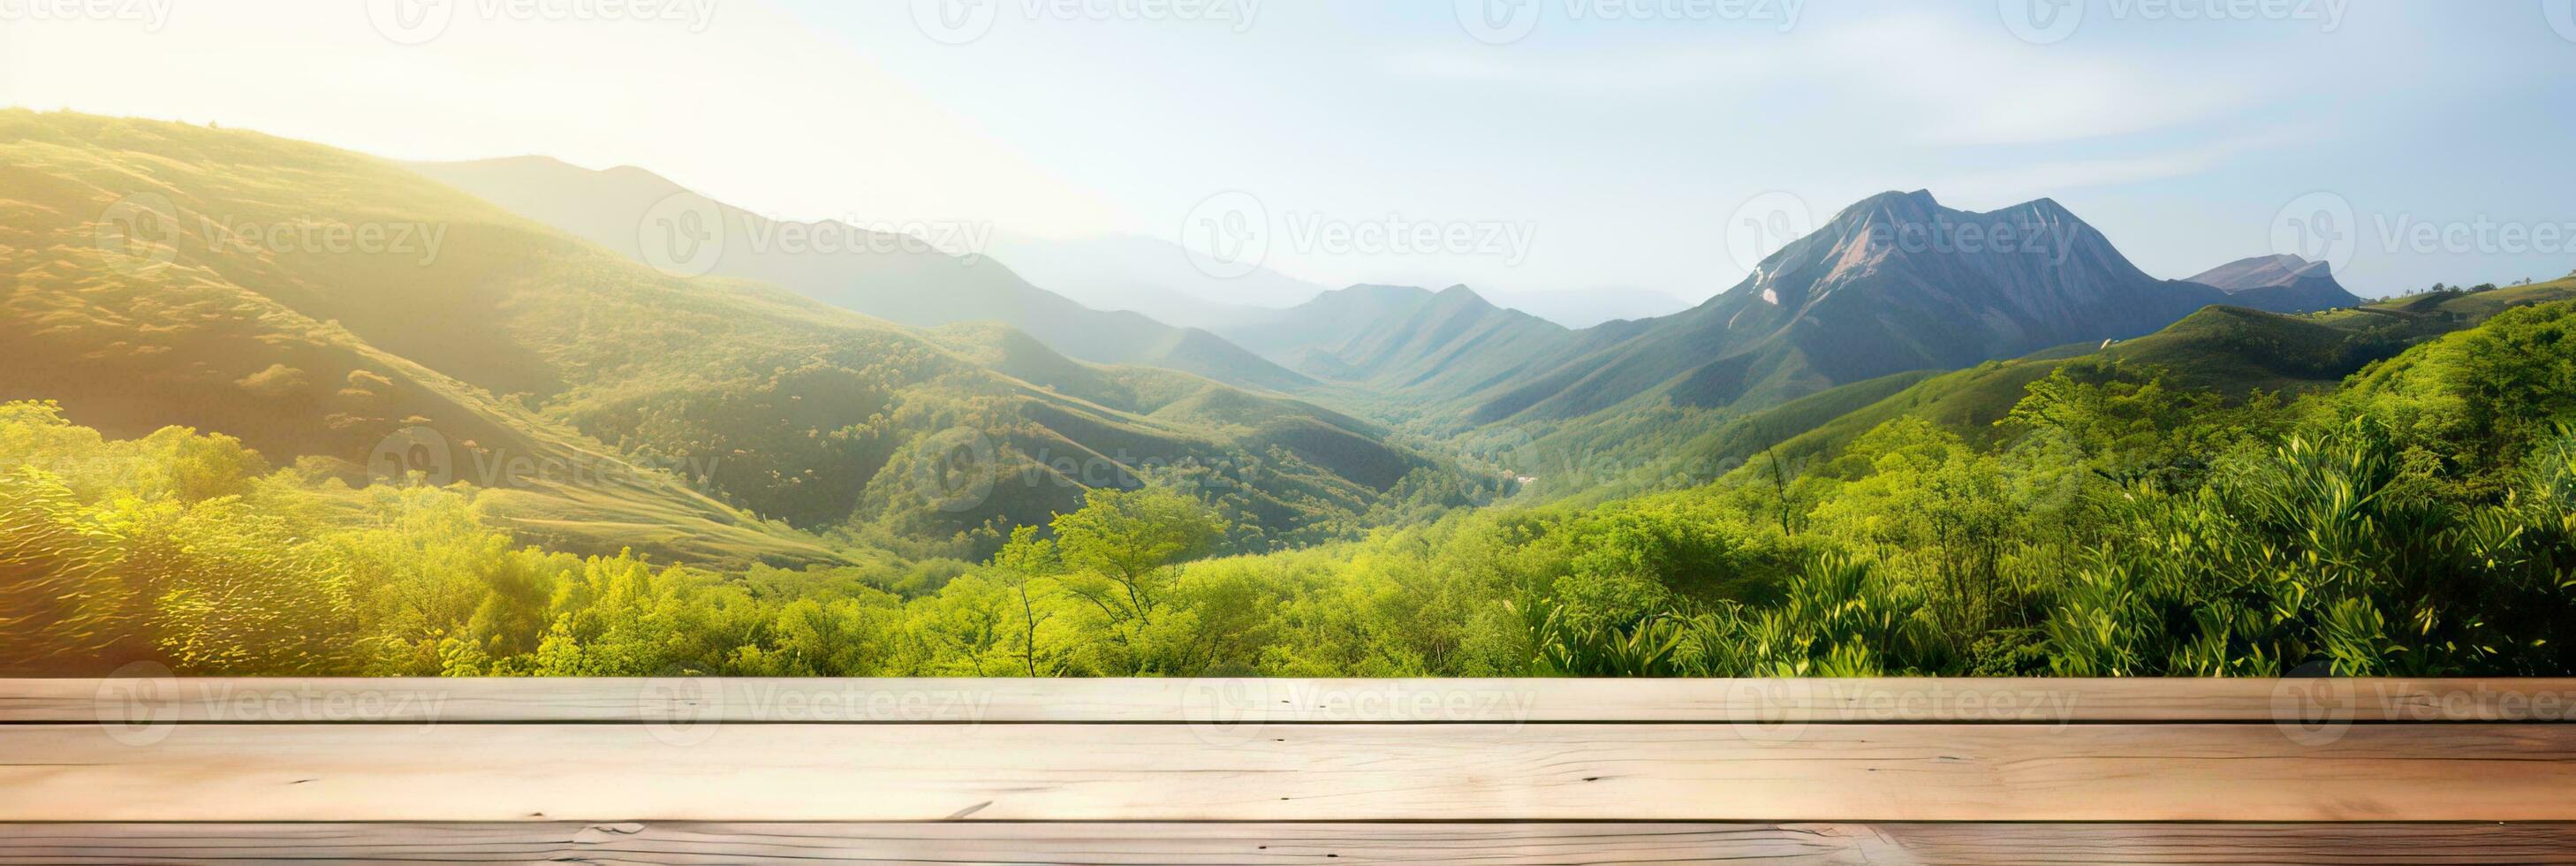 houten tafel terras met backdrop tuin plantage tegen de lucht en de bergen achtergrond. Product foto Scherm. fotomontage samenstelling.